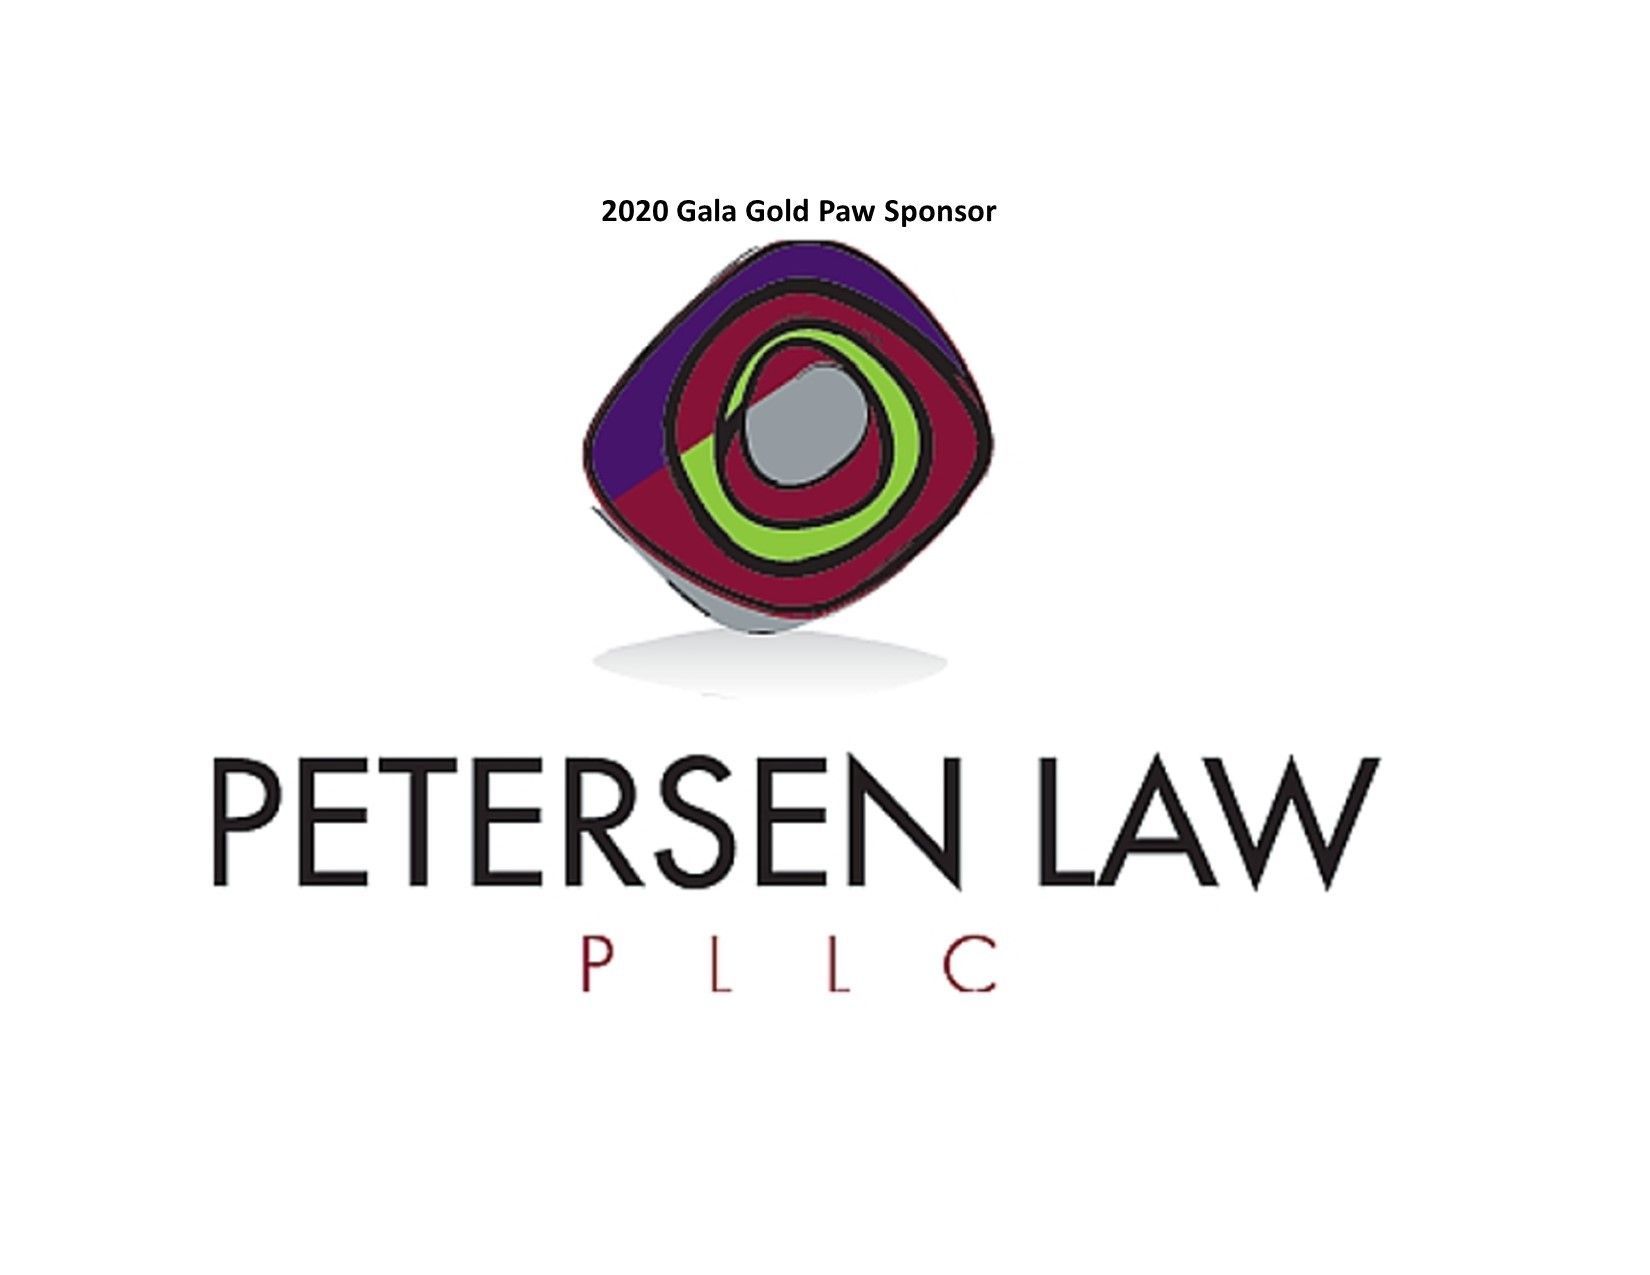 Petersen Law PLLC